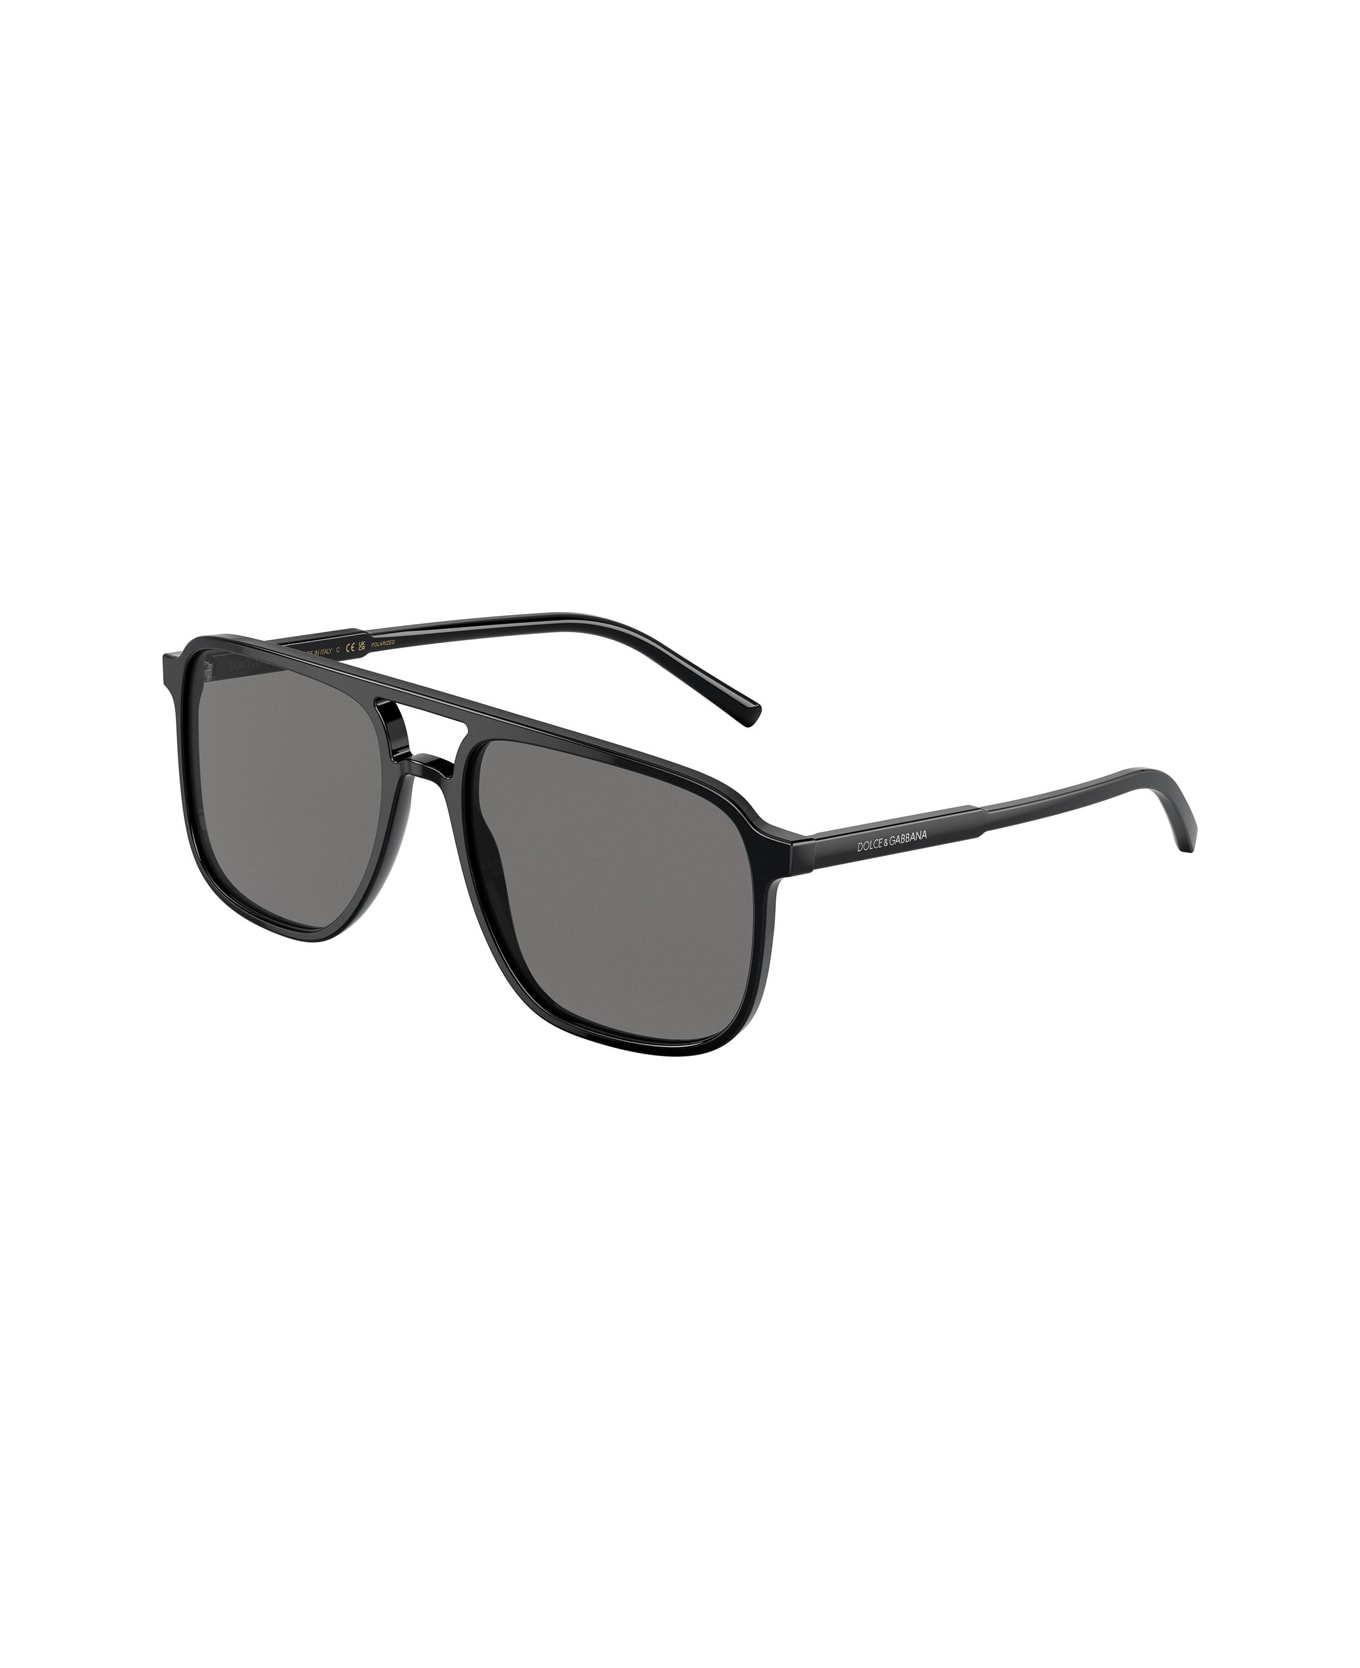 Dolce & Gabbana Eyewear Dg4423 501/81 Sunglasses - Nero